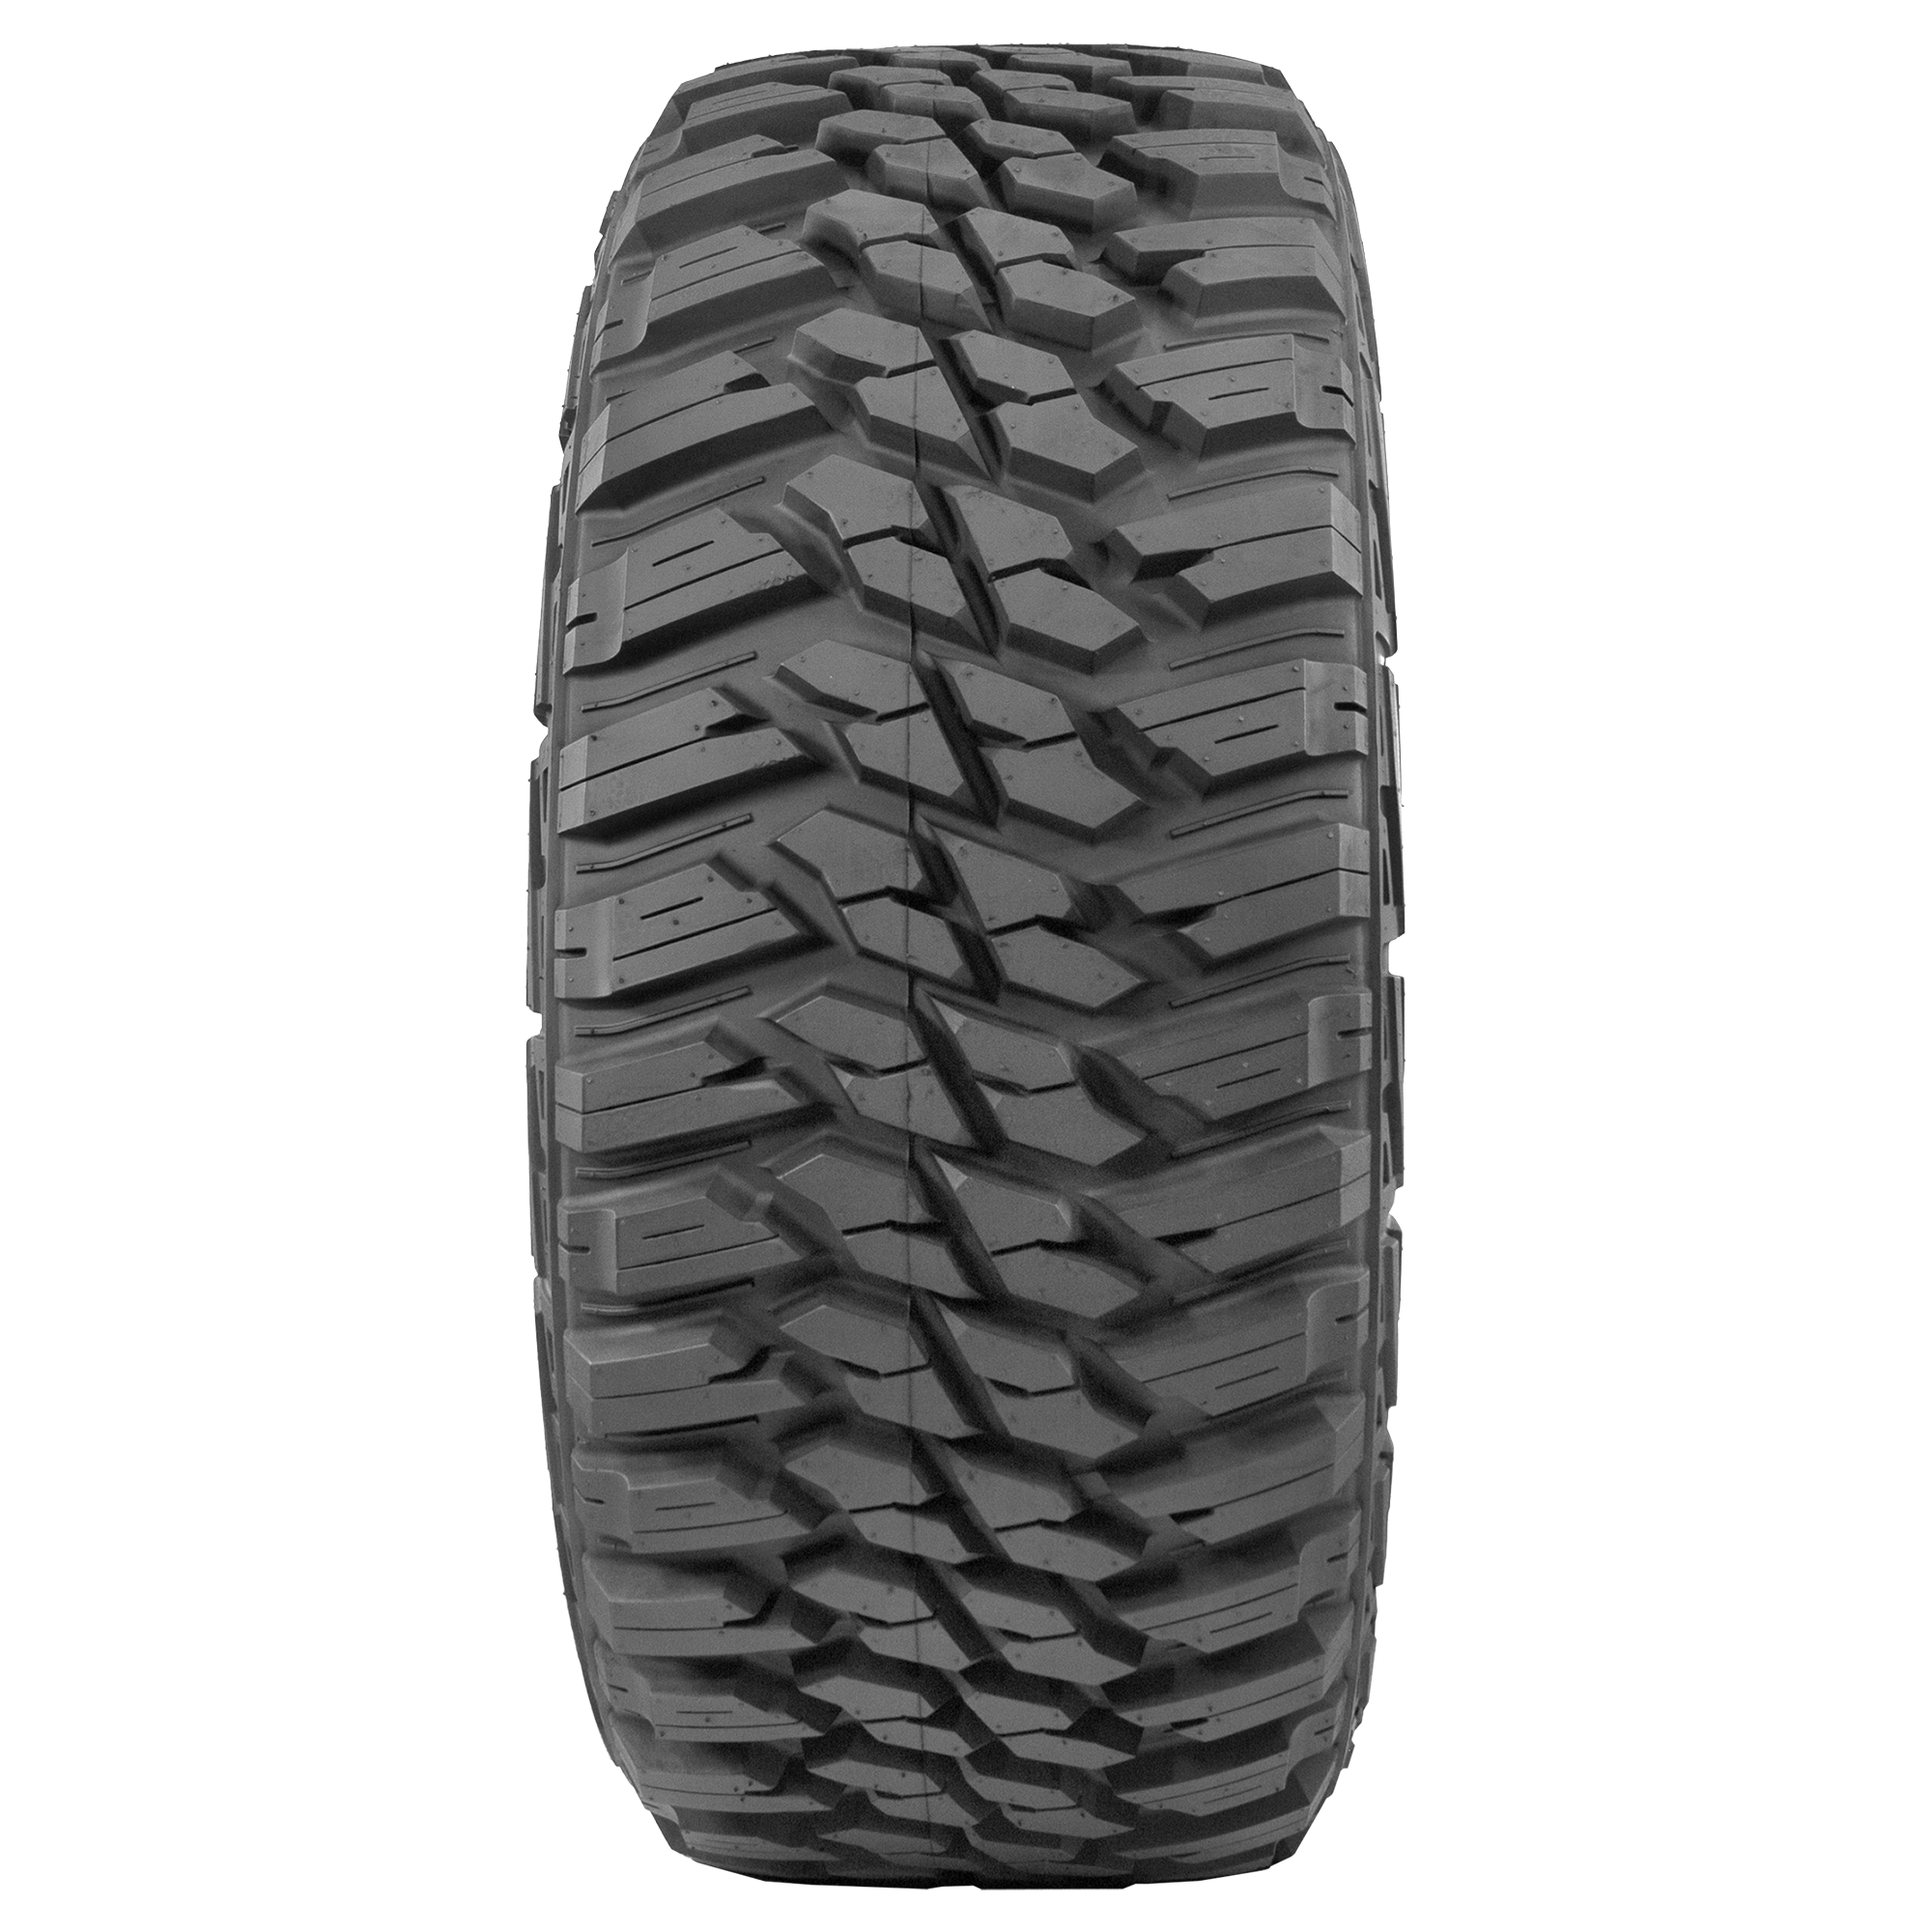 Kanati Mud Hog M/T LT275/60R20 123Q Mud Terrain Tire (Tire Only) - image 4 of 5